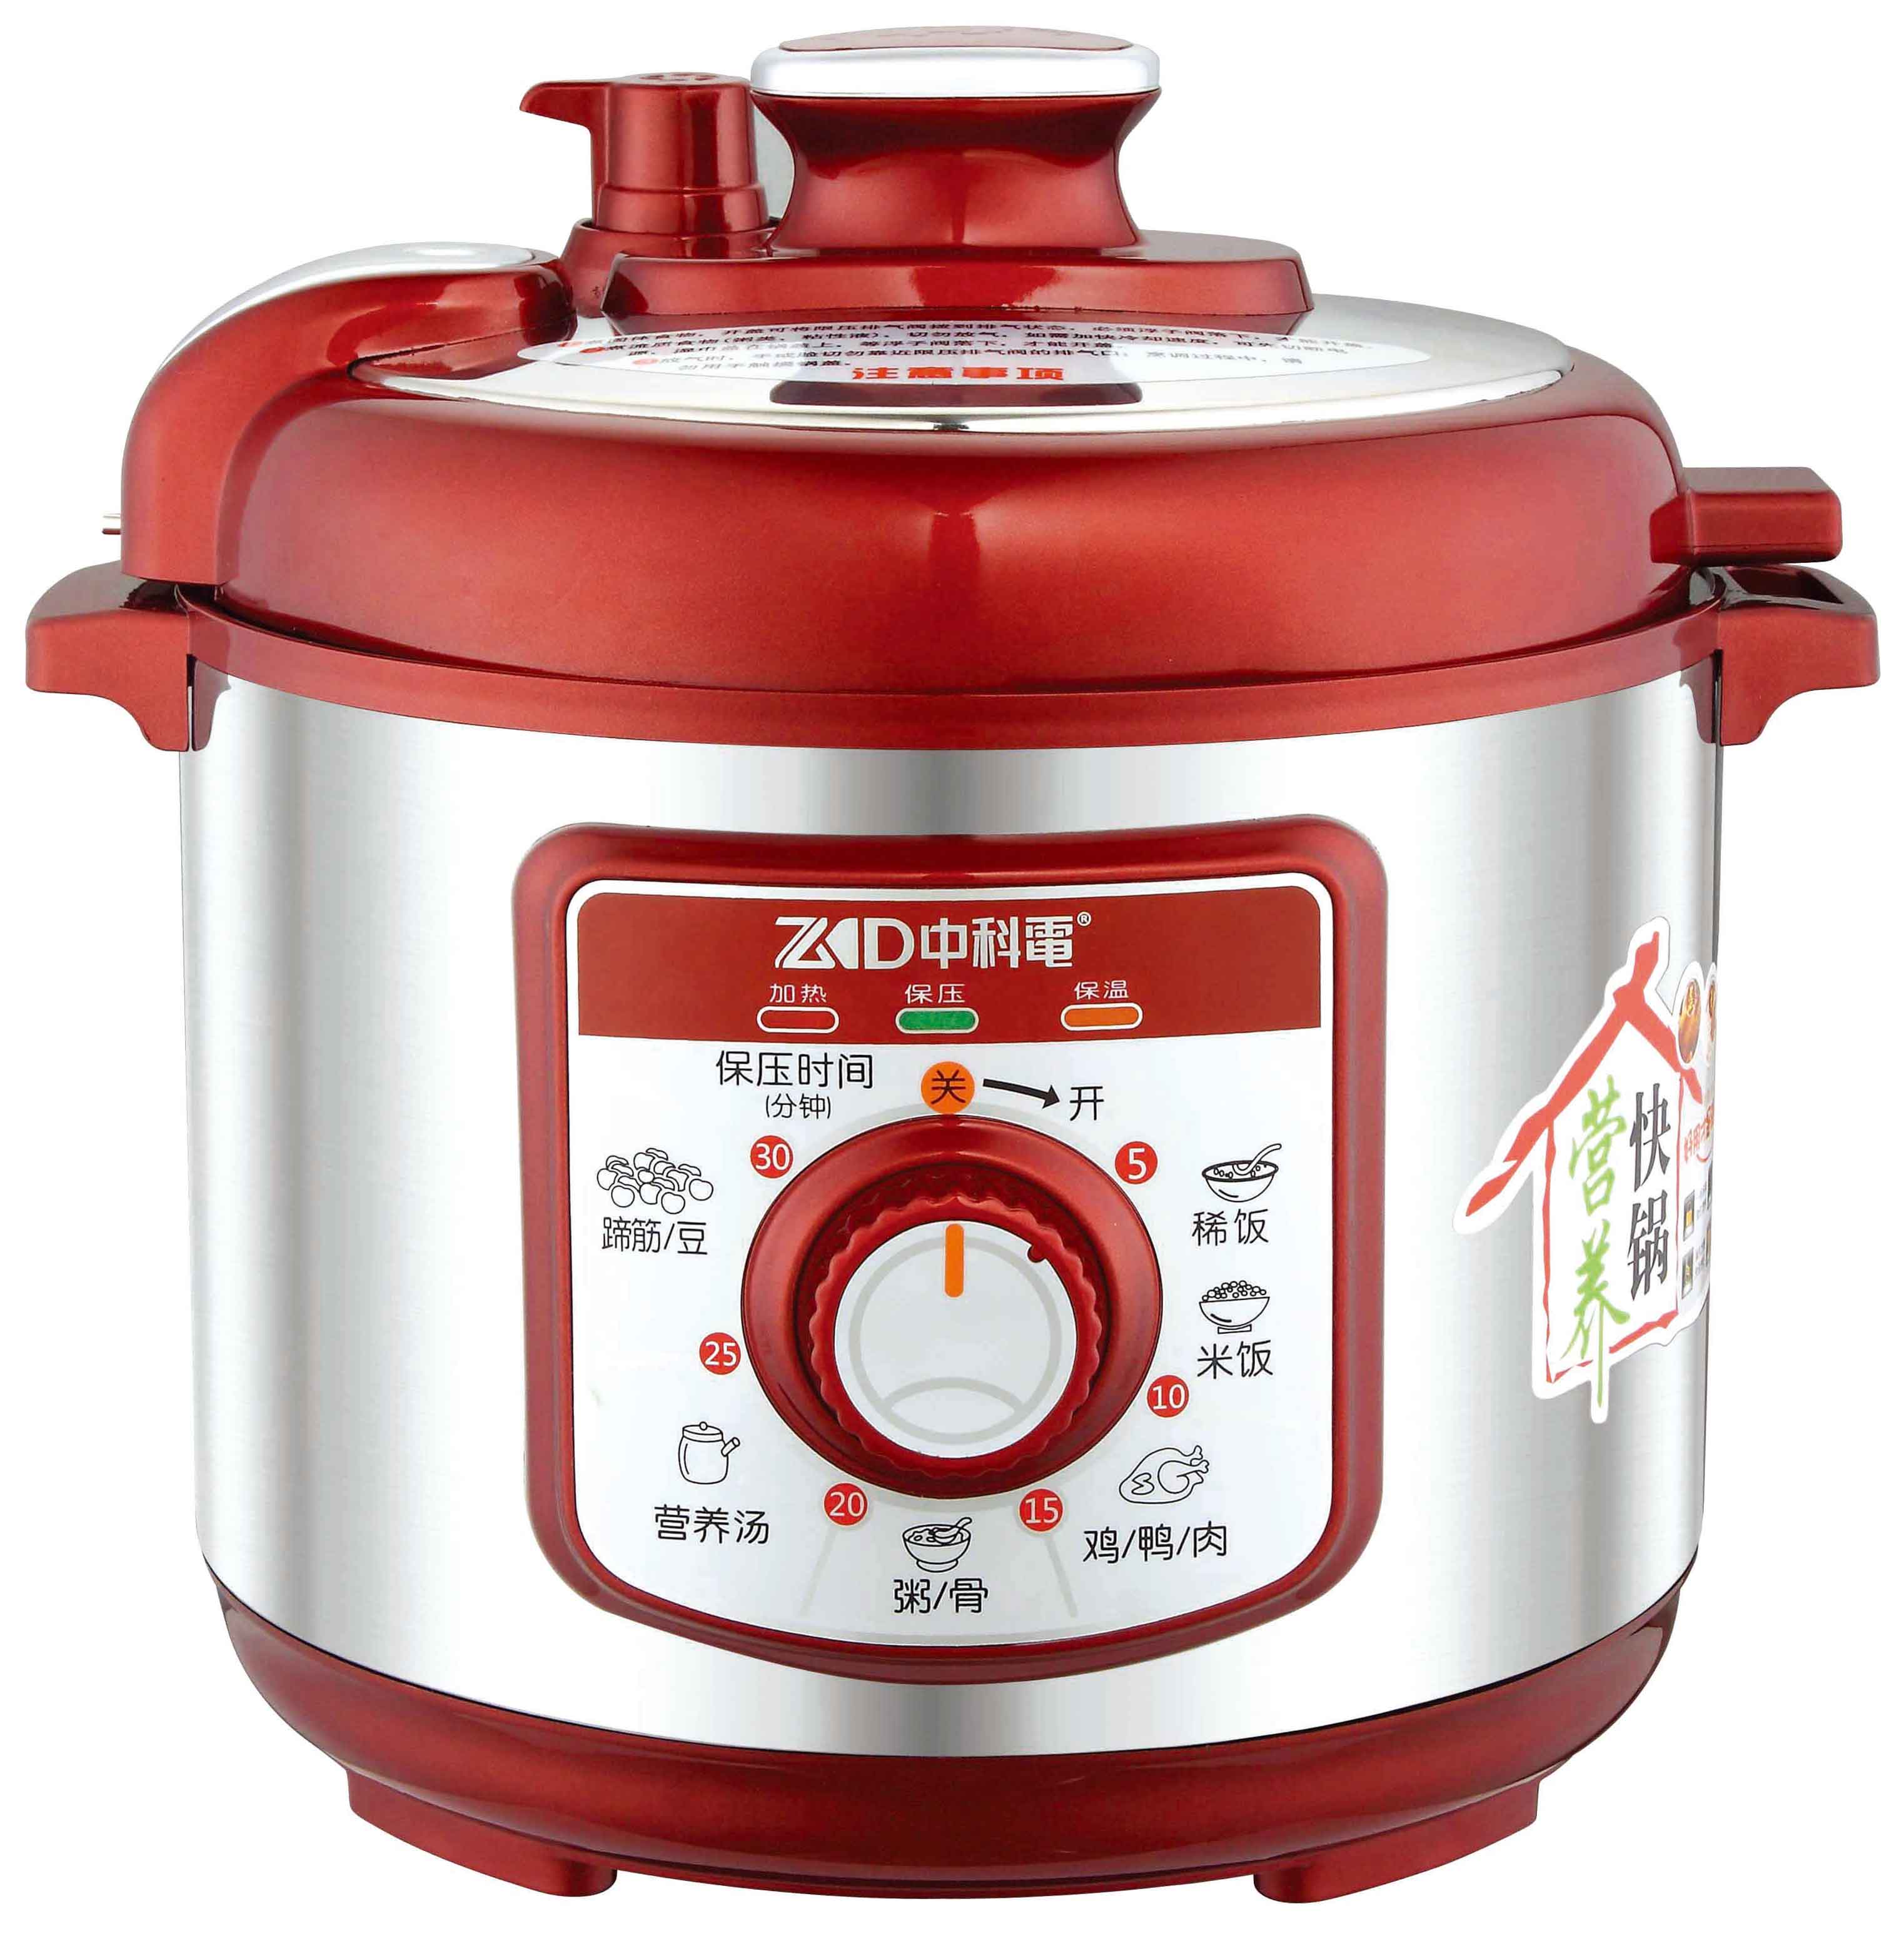 ZKD JIYUNSTARA (red)Mechanics Pressure Cooker 6L Capacity